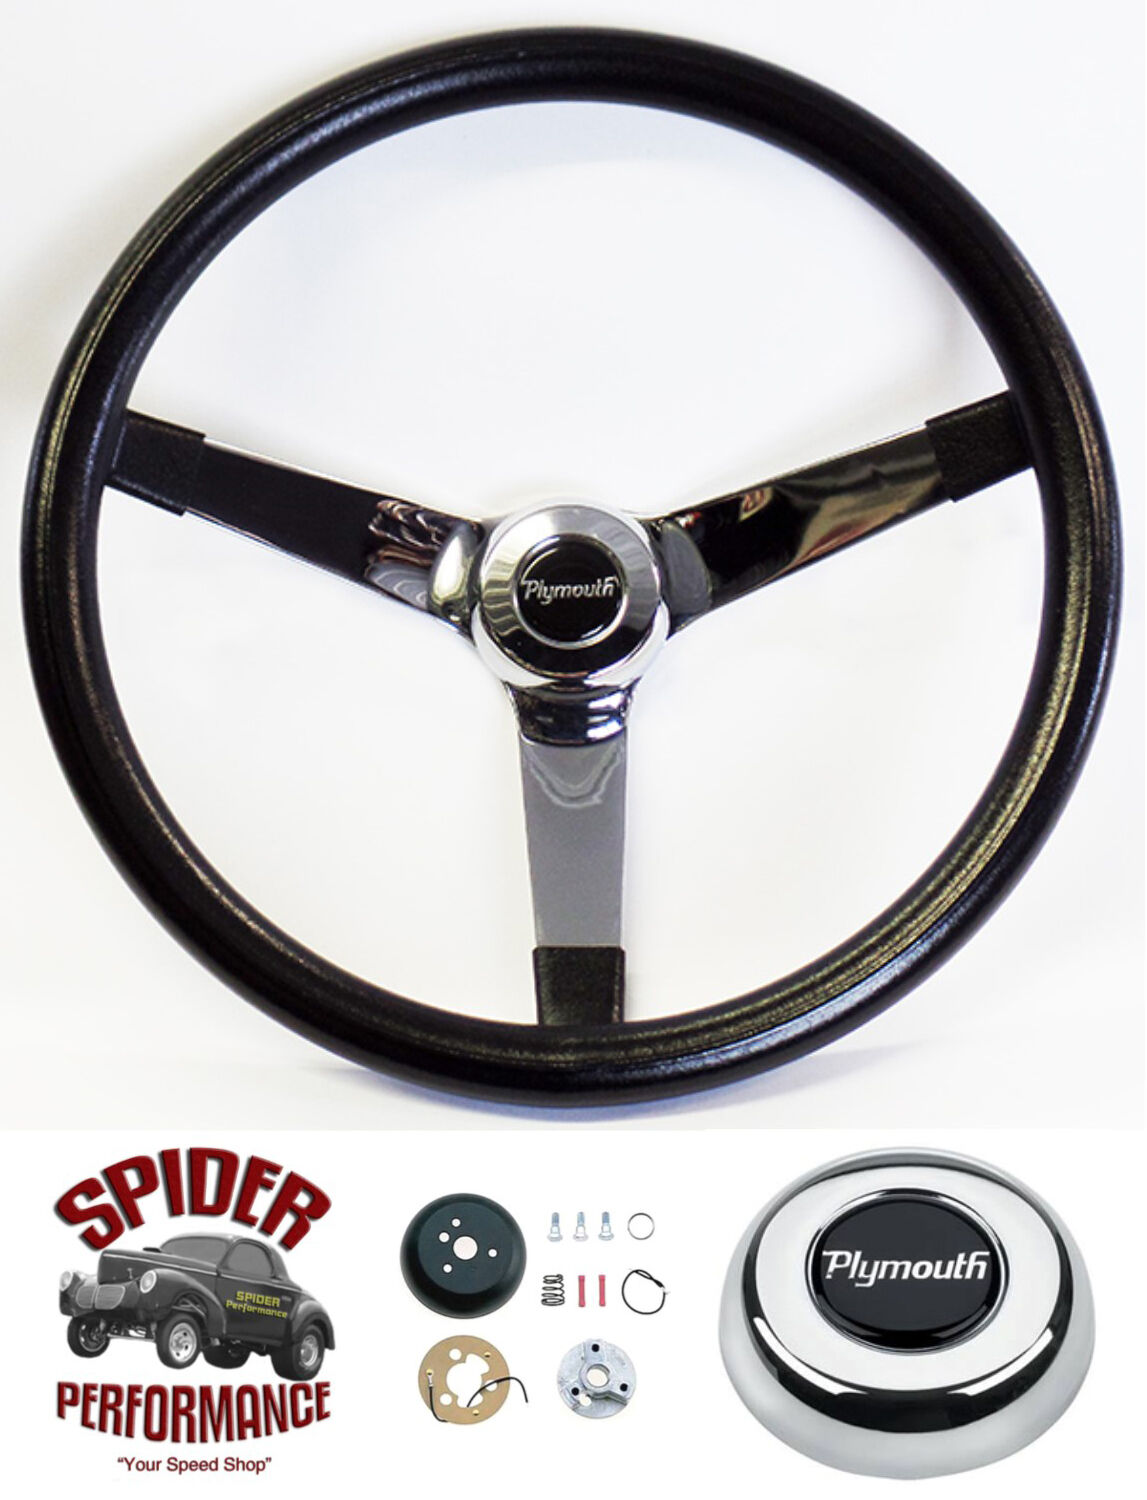 1967 Plymouth steering wheel 14 3/4